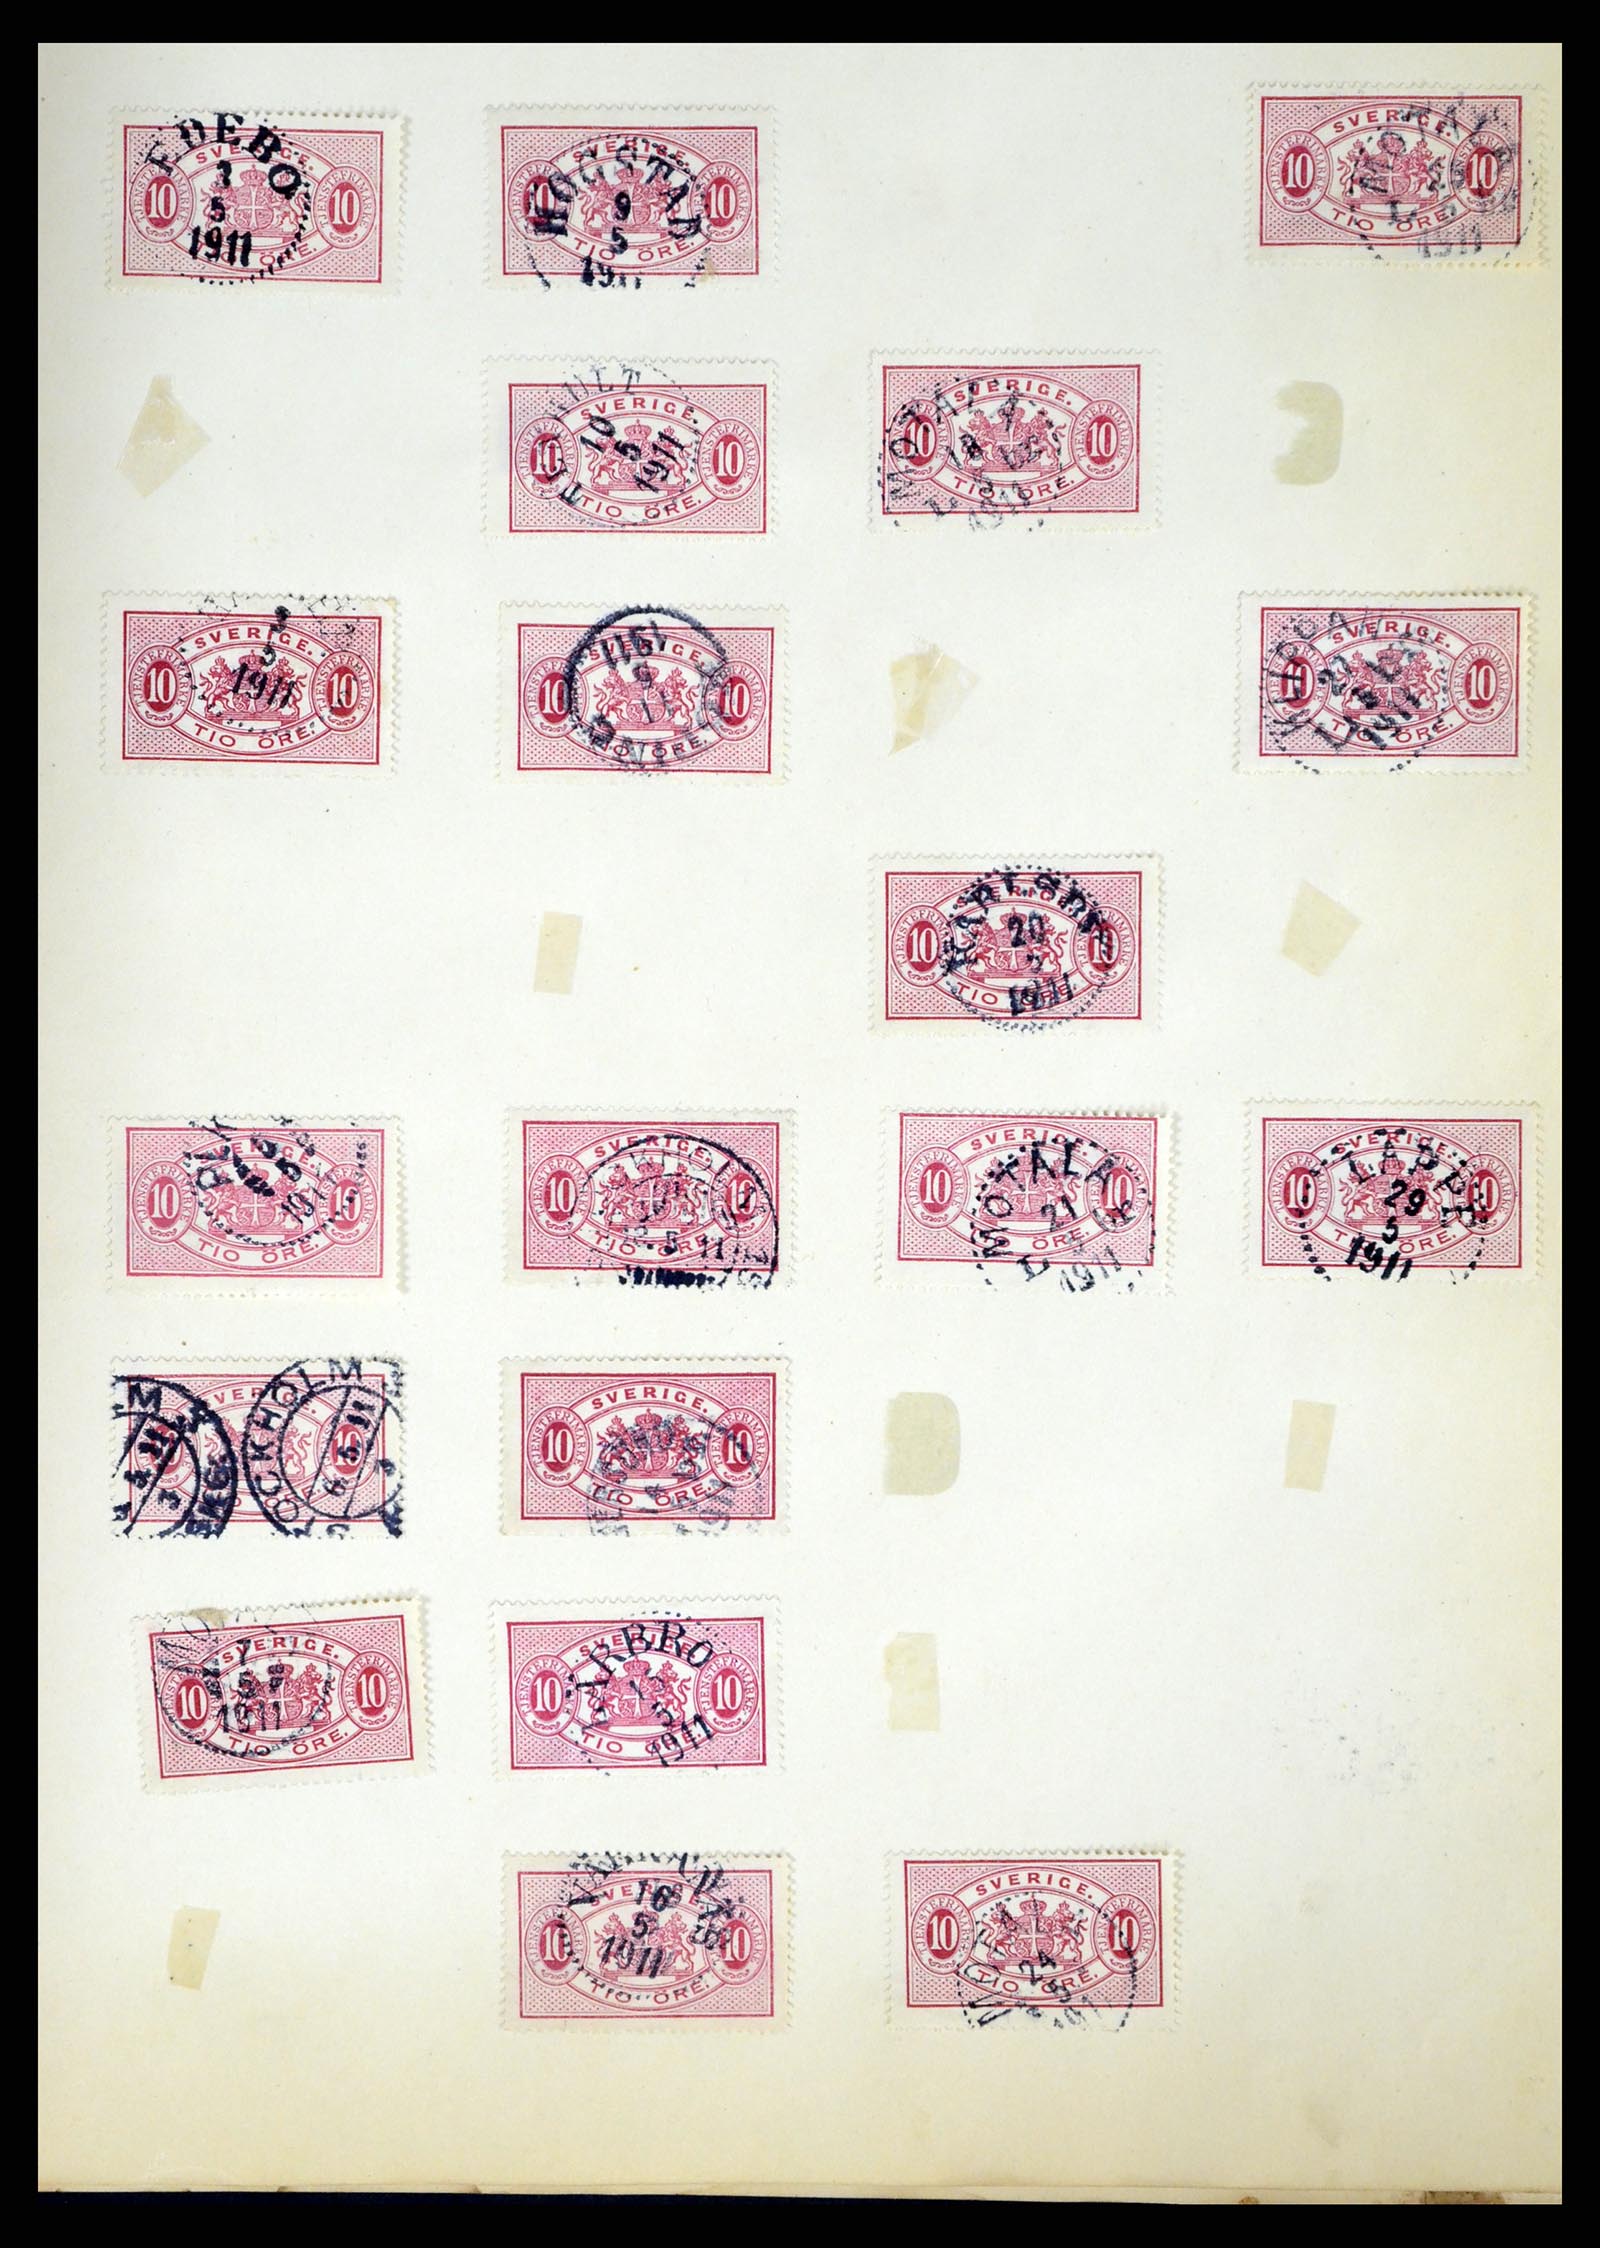 37916 258 - Stamp Collection 37916 Sweden cancels 1874-1896.